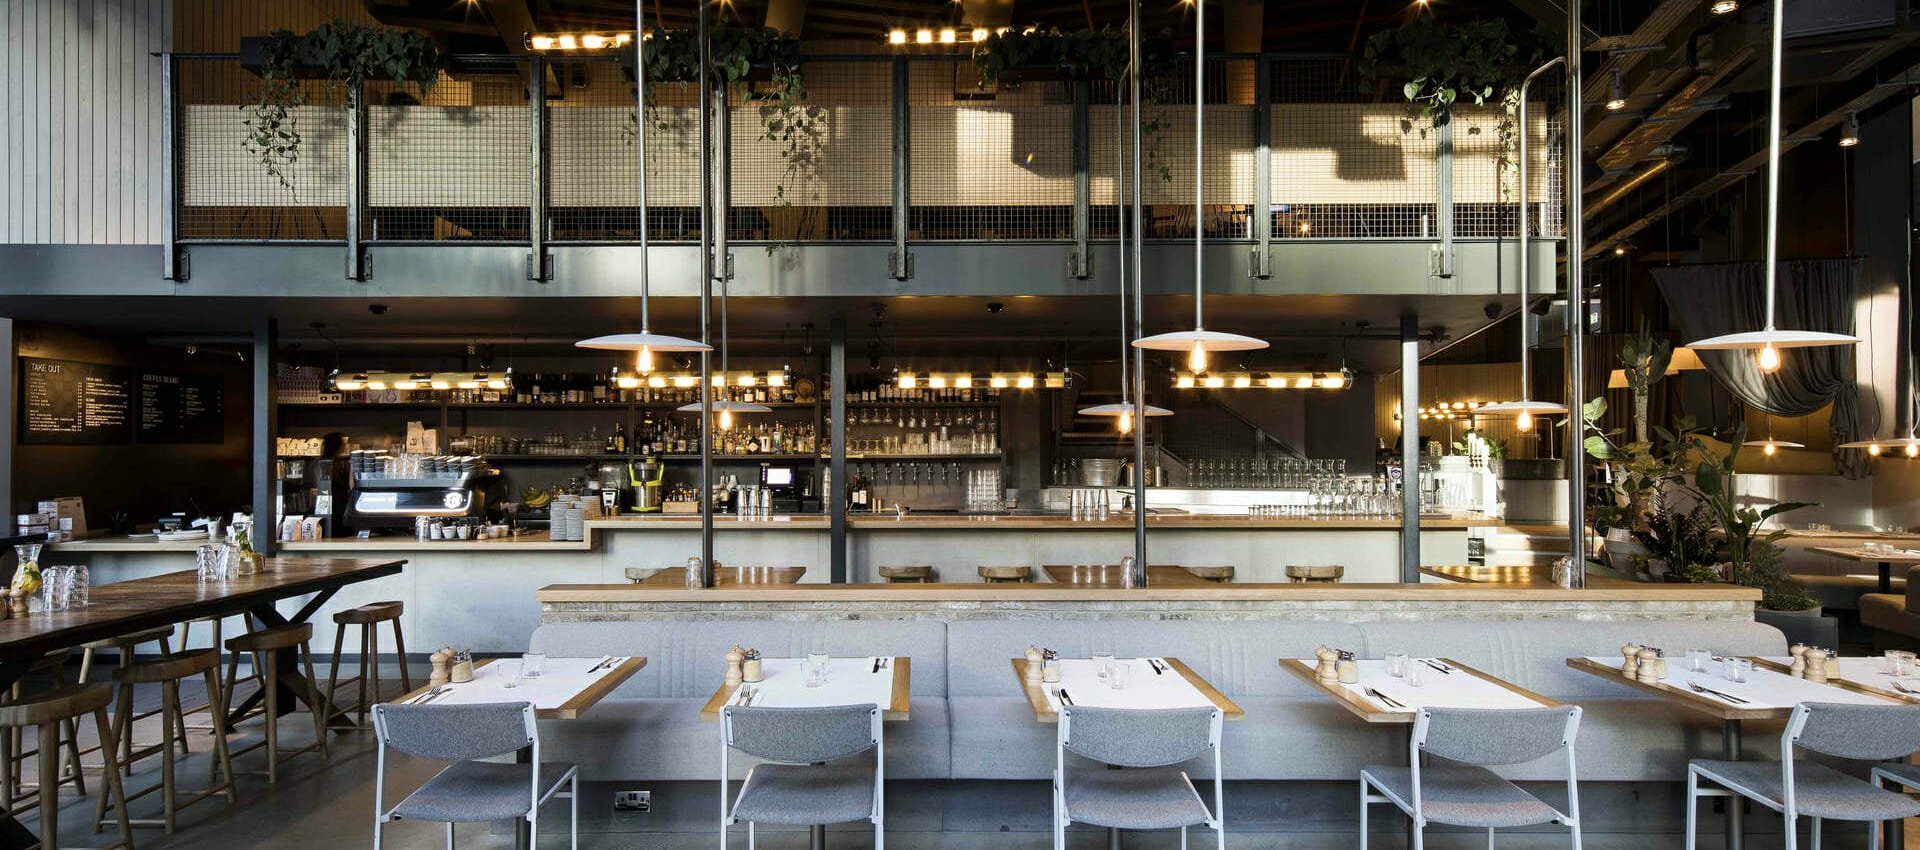 Caravan City restaurant, dining room, mezzanine and bar | Bloomberg Arcade